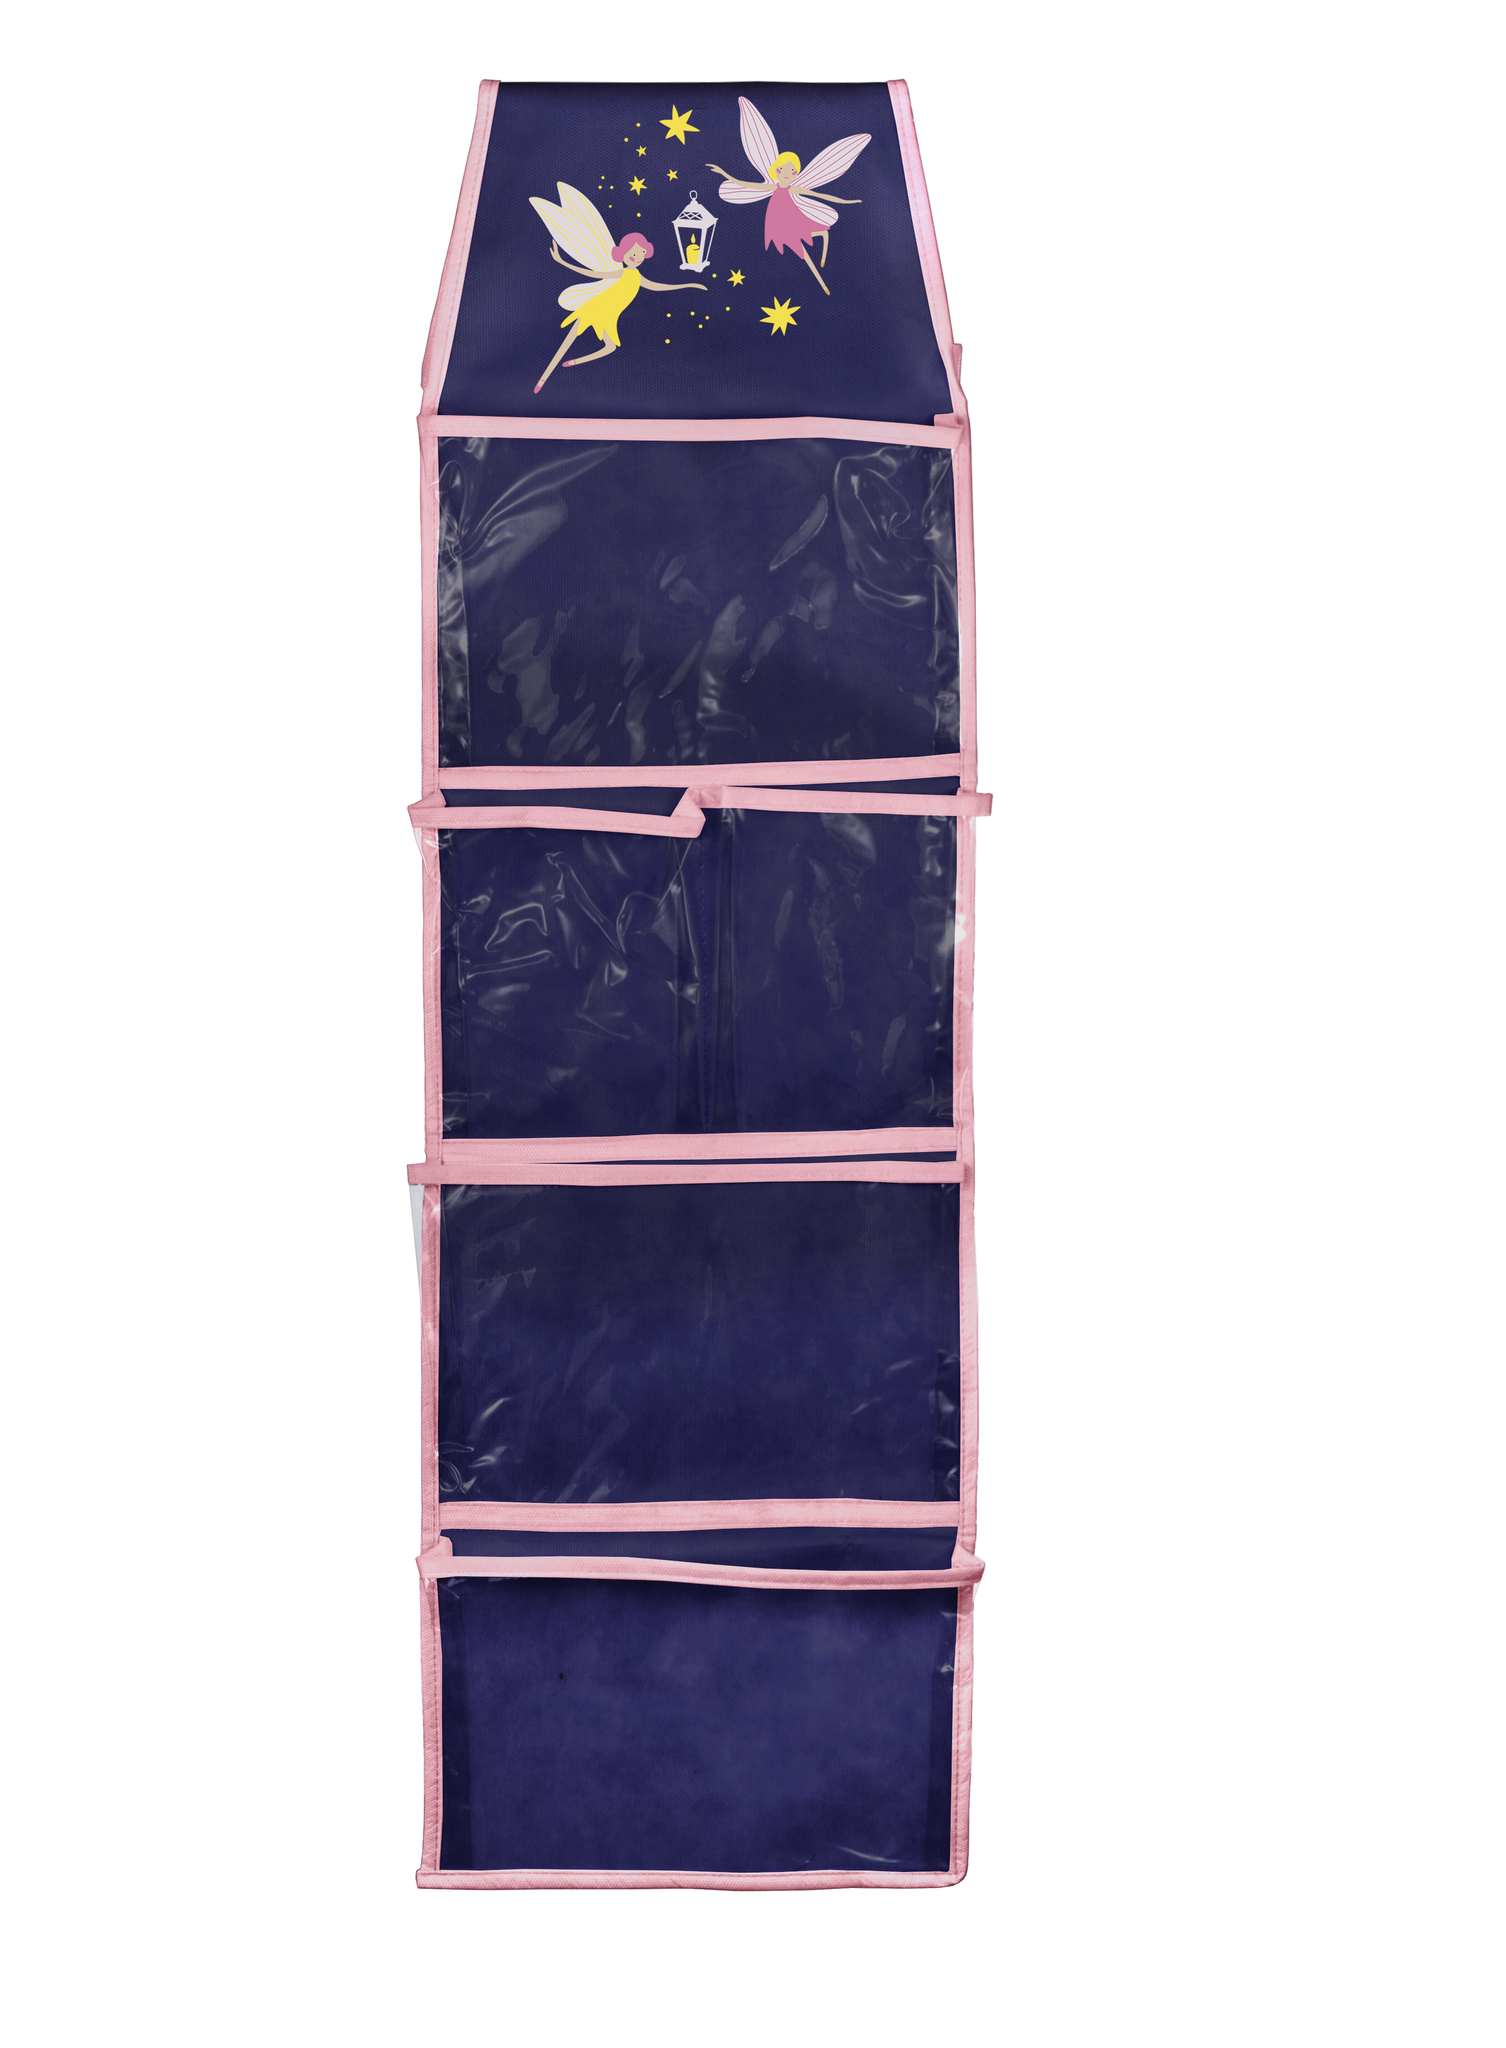 Кармашки в садик для детского шкафчика 85х24 см, Феи (Синий)